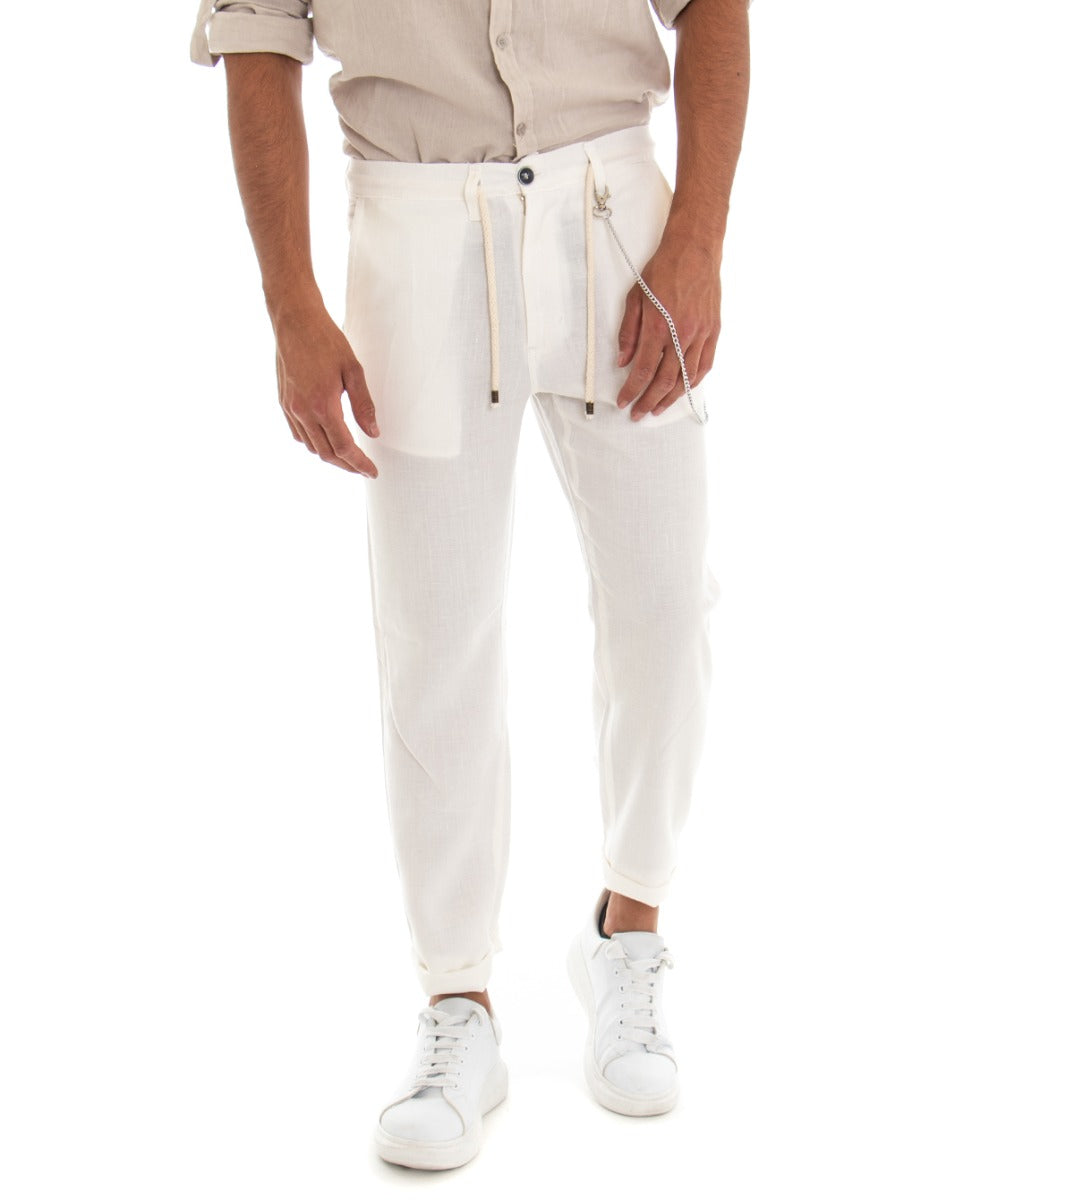 Pantaloni Uomo Tasca America Basic Tinta Unita Bianco Lino Coulisse GIOSAL-P3006A